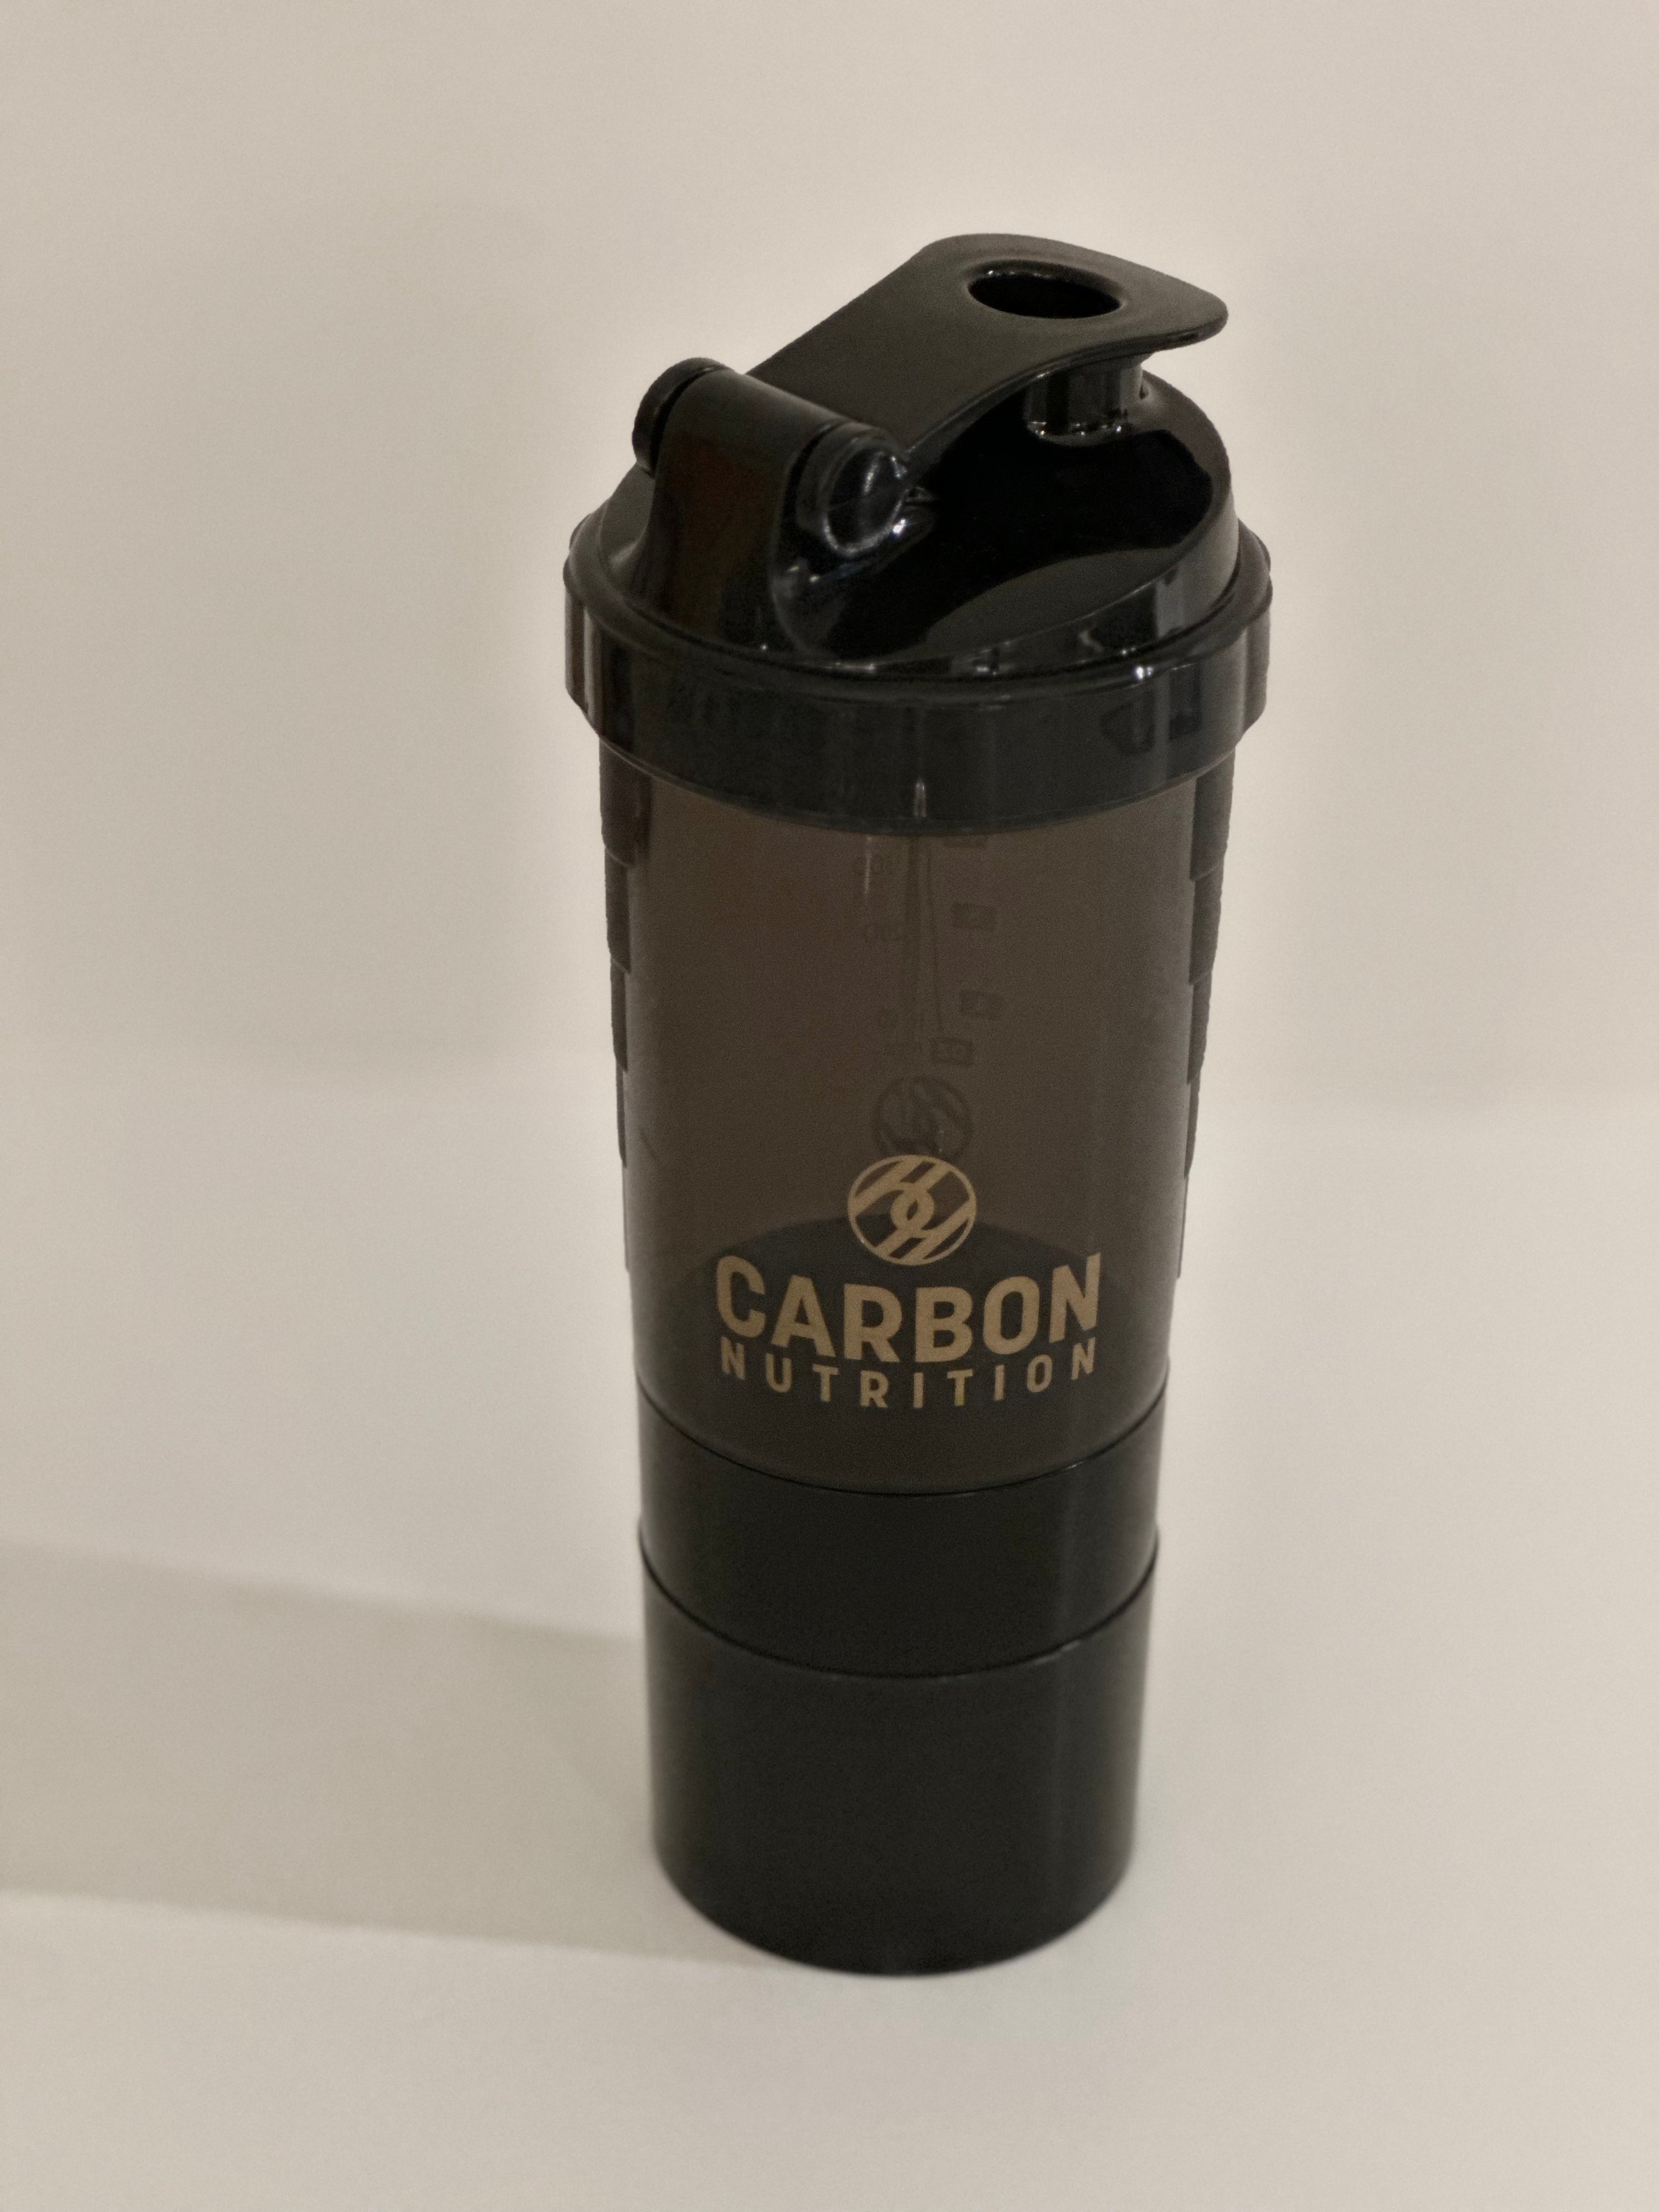 Carbon Shaker